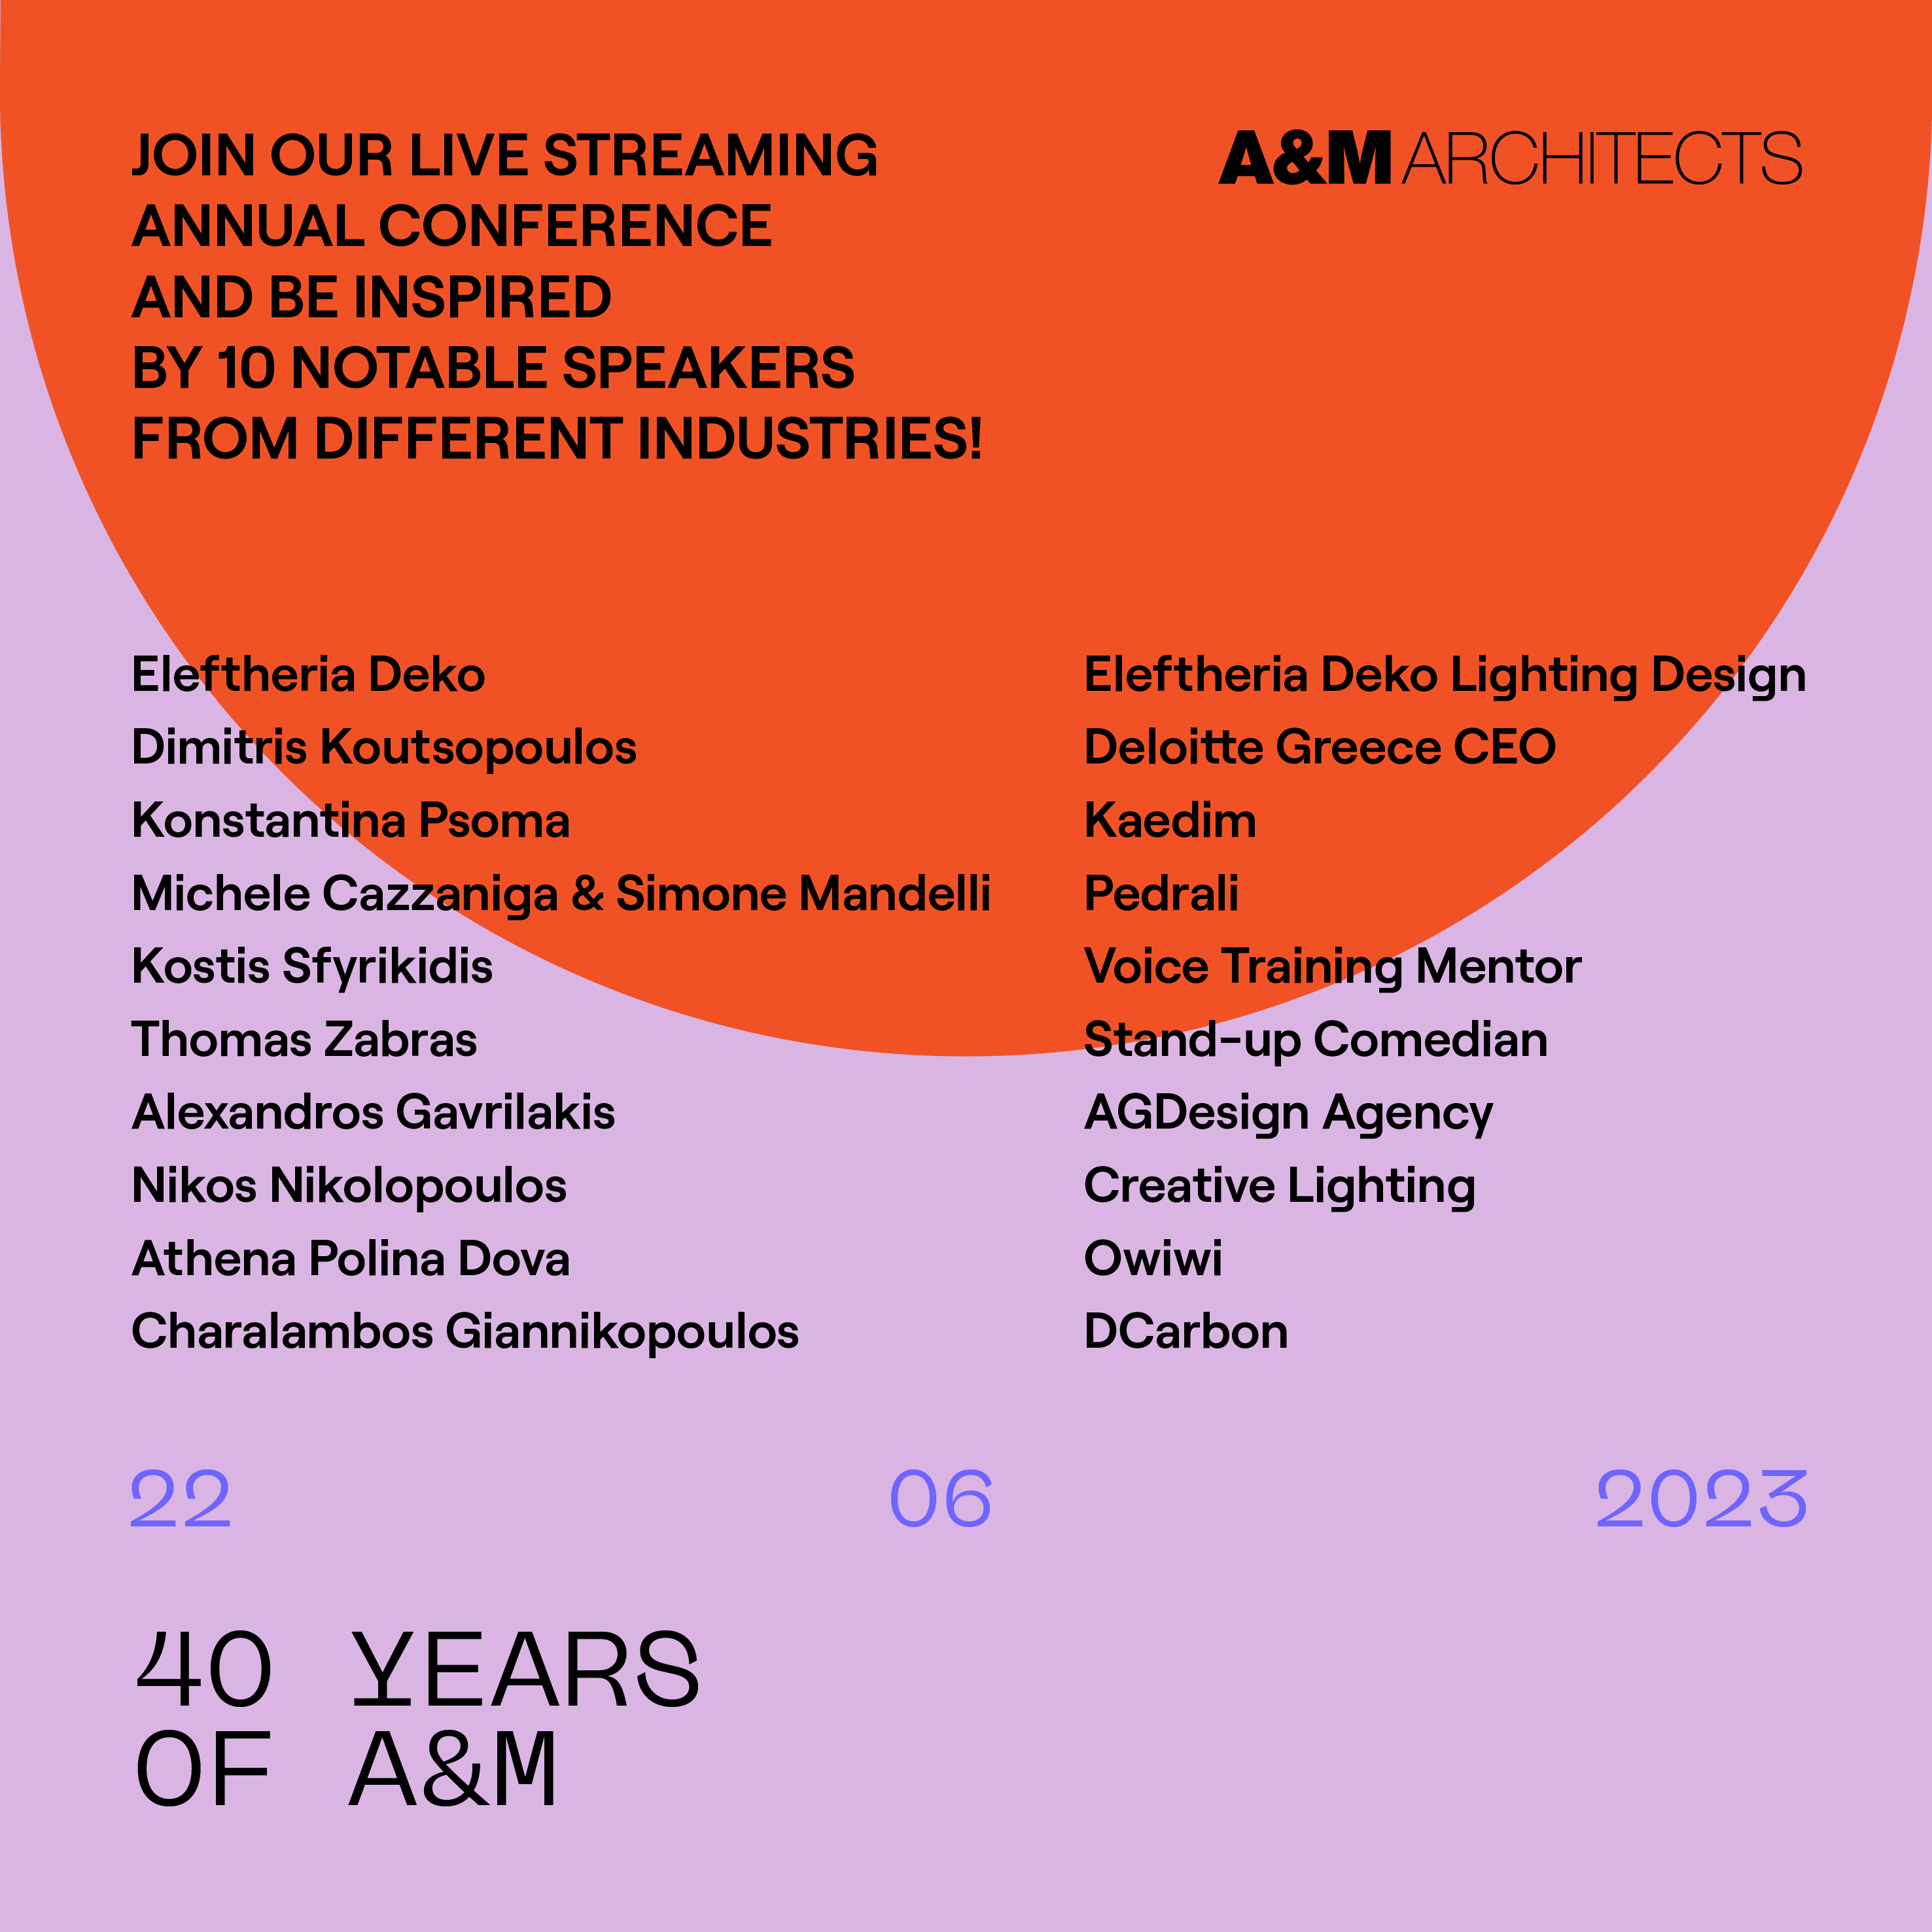 Archisearch 40 YEARS OF A&M ARCHITECTS // Η A&M Architects ανακοινώνει ένα εντυπωσιακό line up ομιλιών σε ζωντανή μετάδοση για την επετειακή της ημερίδα γιορτάζοντας 40 χρόνια αρχιτεκτονικής πορείας